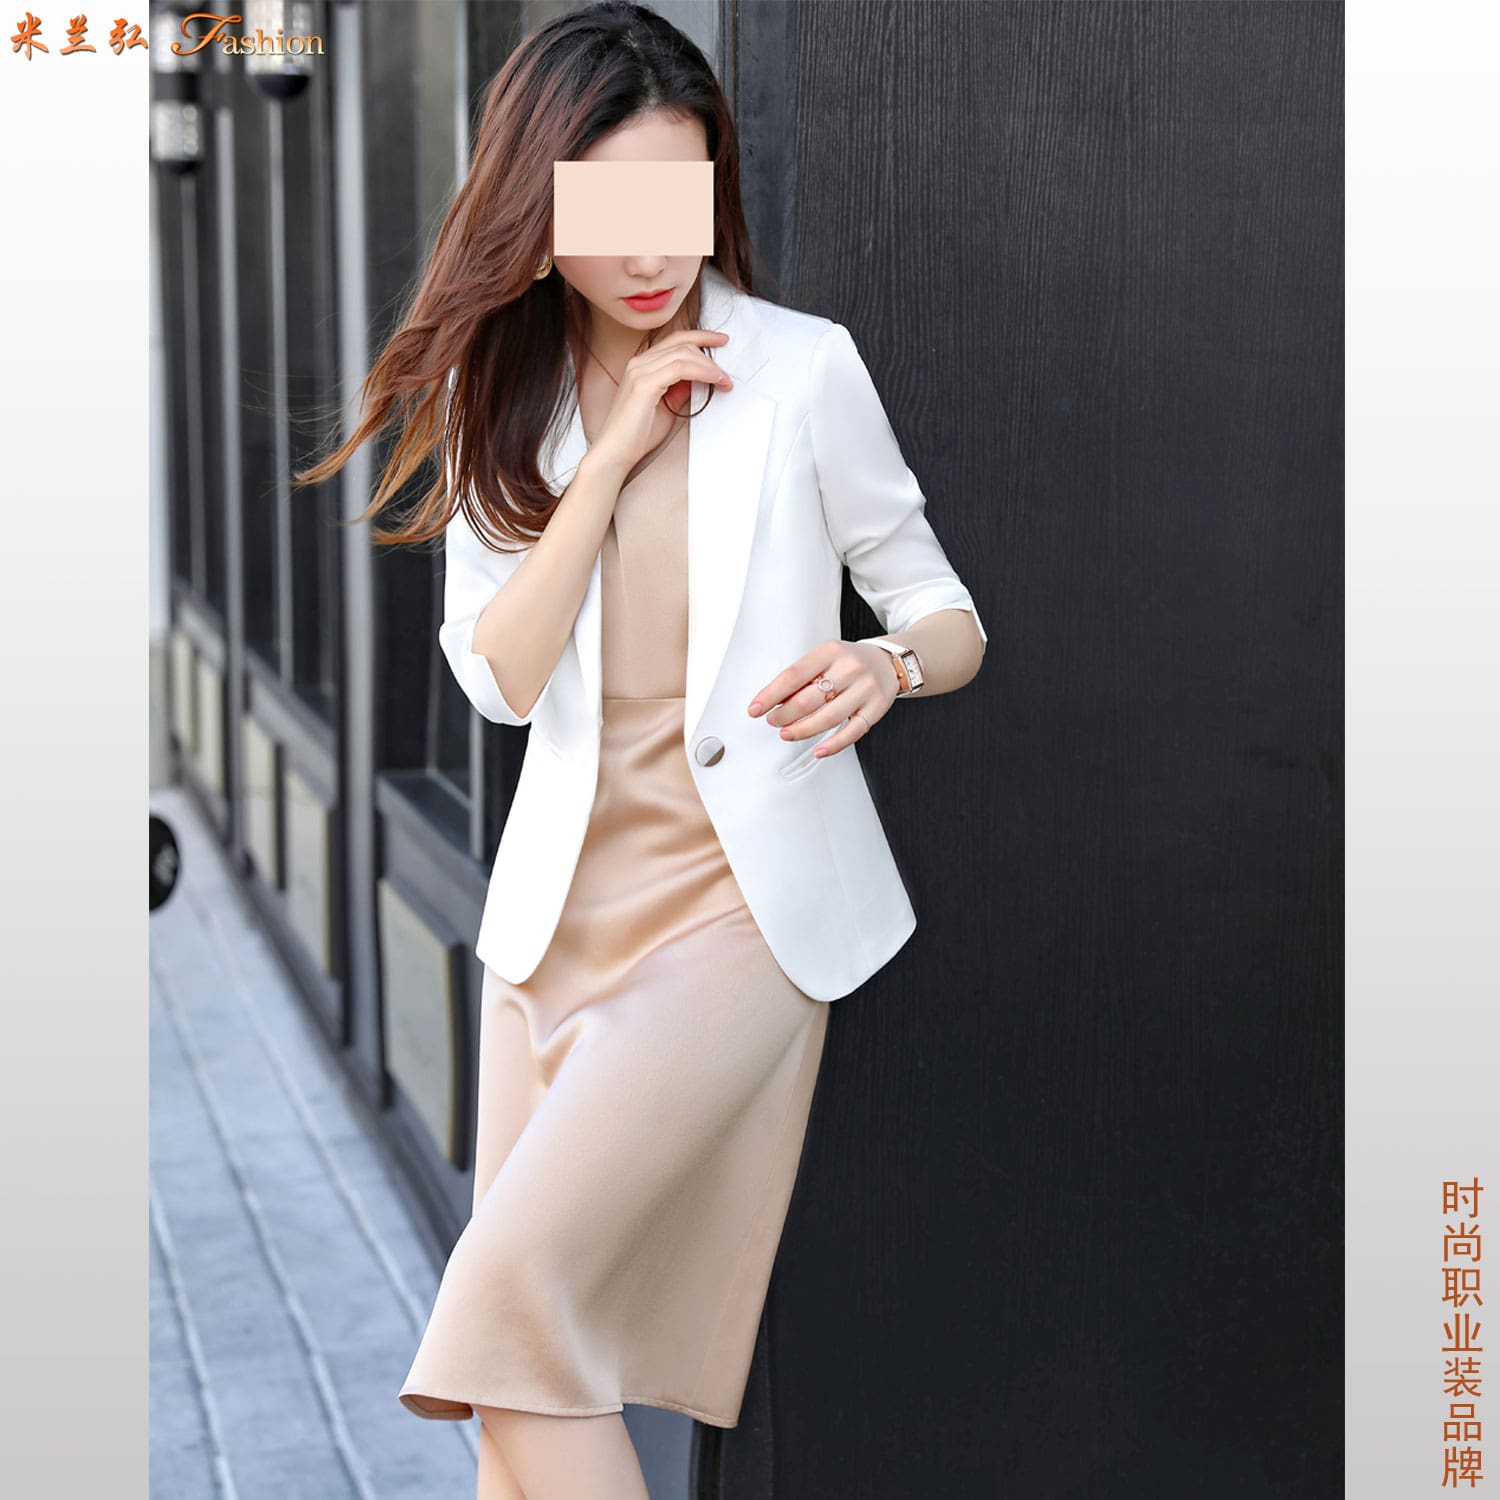 /static/upload/image/zhiyezhuangSPdx1/女职业装短袖连衣裙图片s.jpg